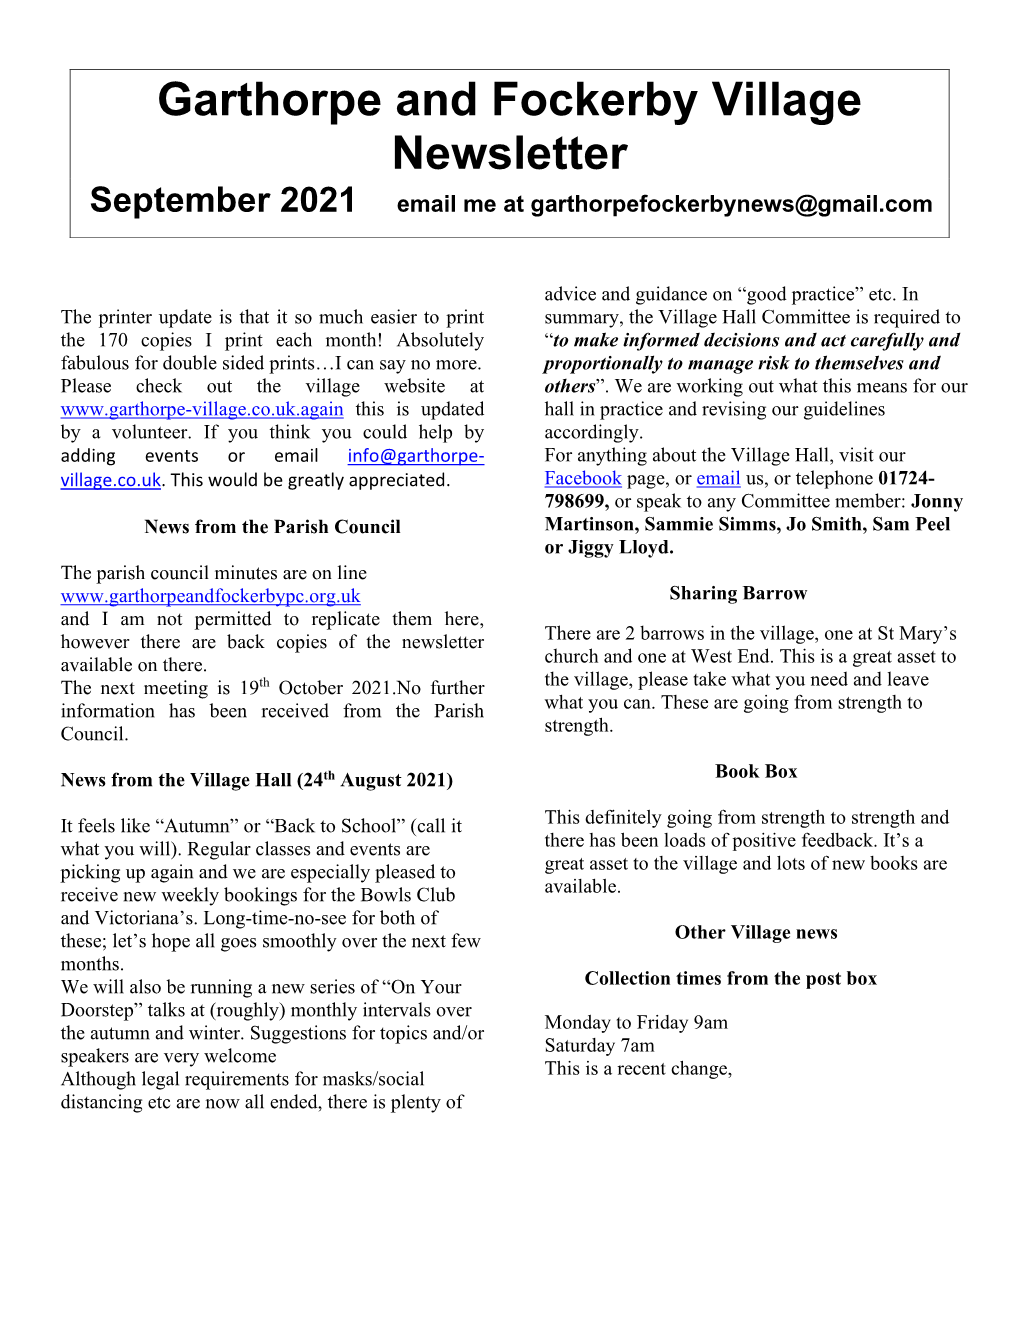 Garthorpe and Fockerby Village Newsletter September 2021 Email Me at Garthorpefockerbynews@Gmail.Com